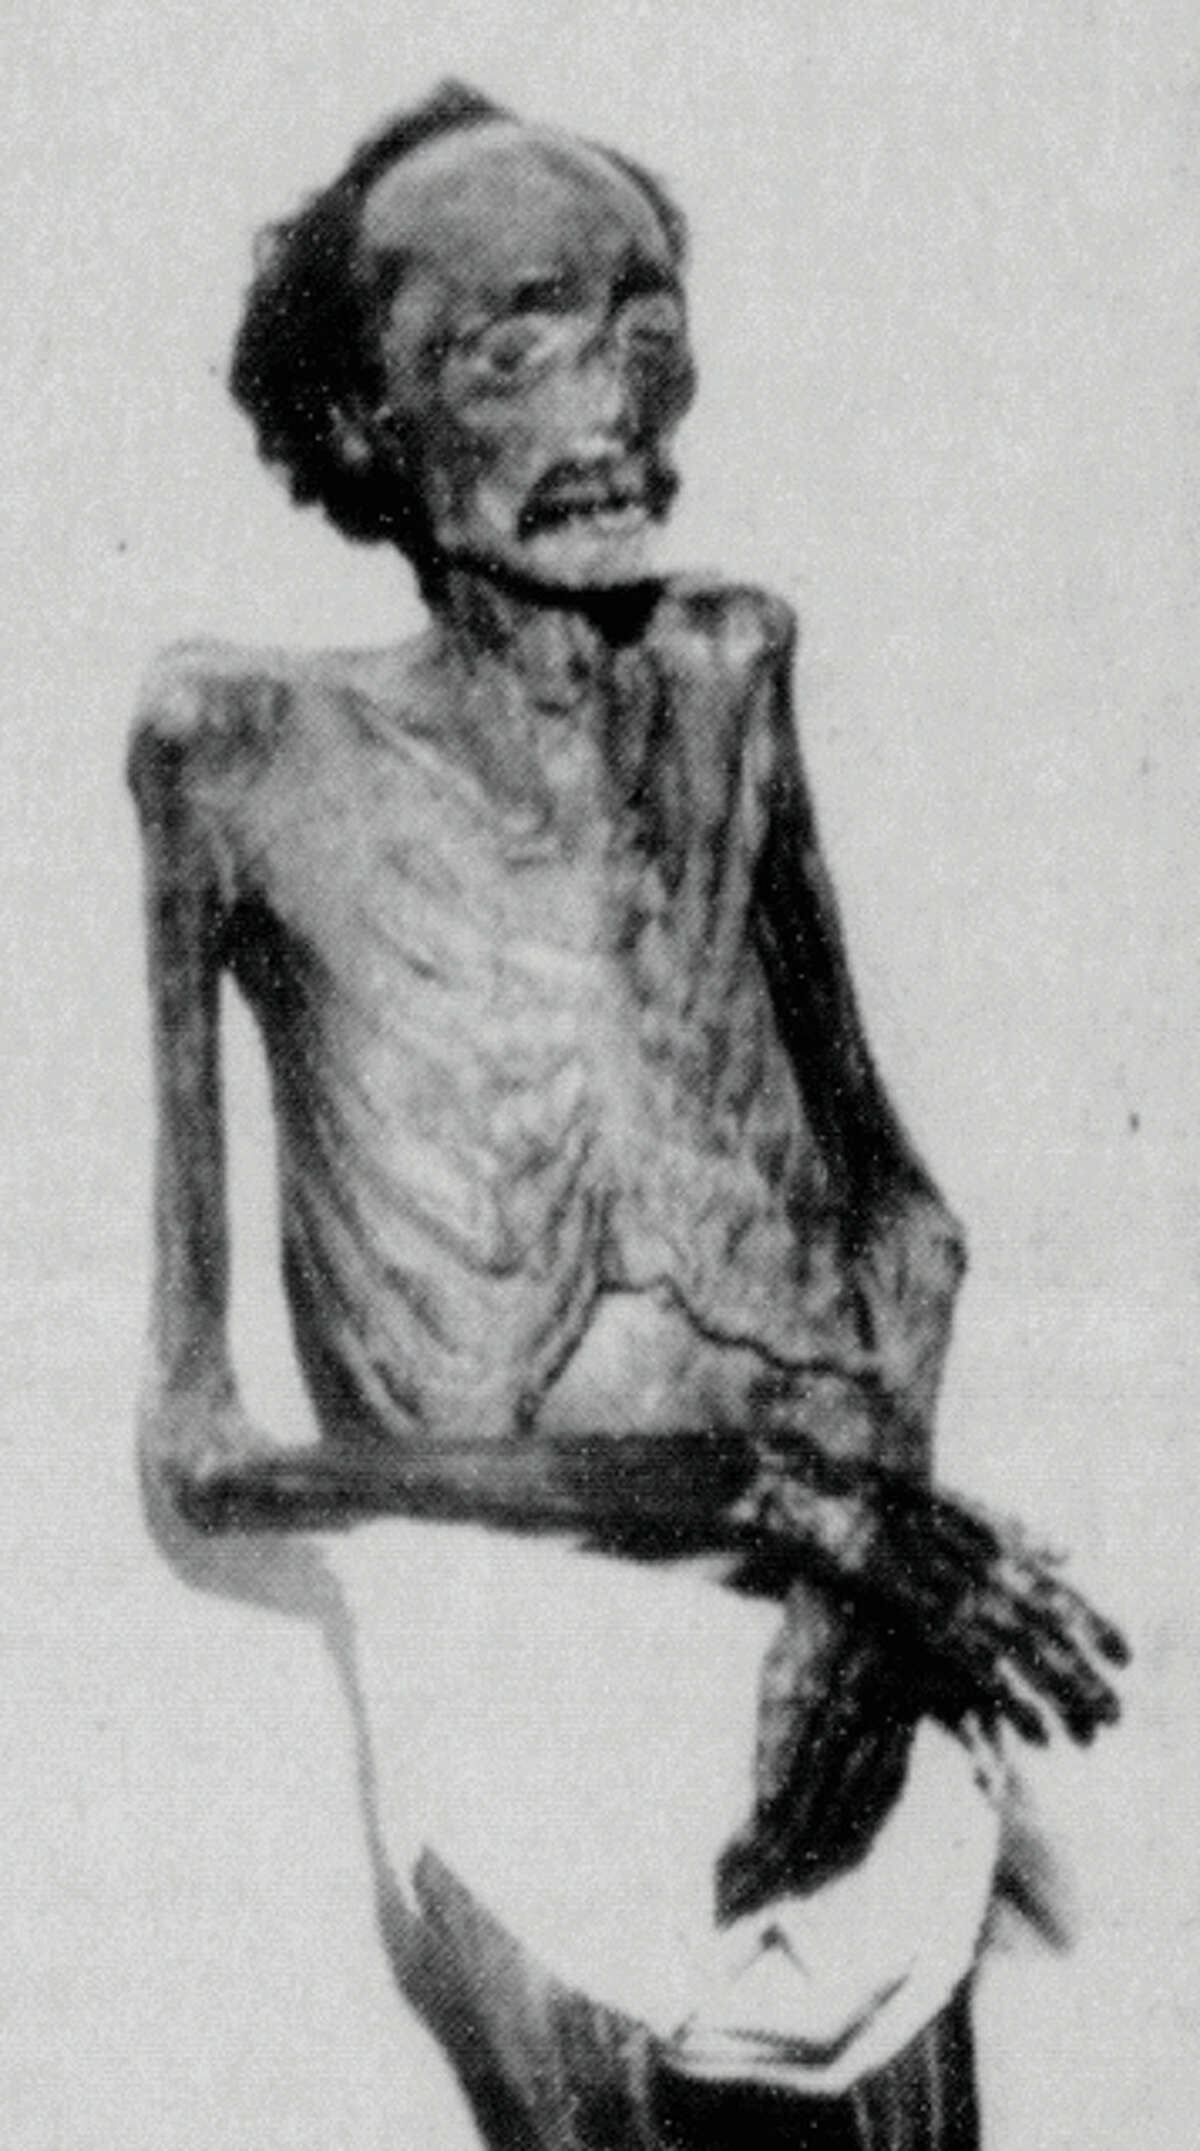 The mummified body of Deaf Bill when it was buried in 1996.